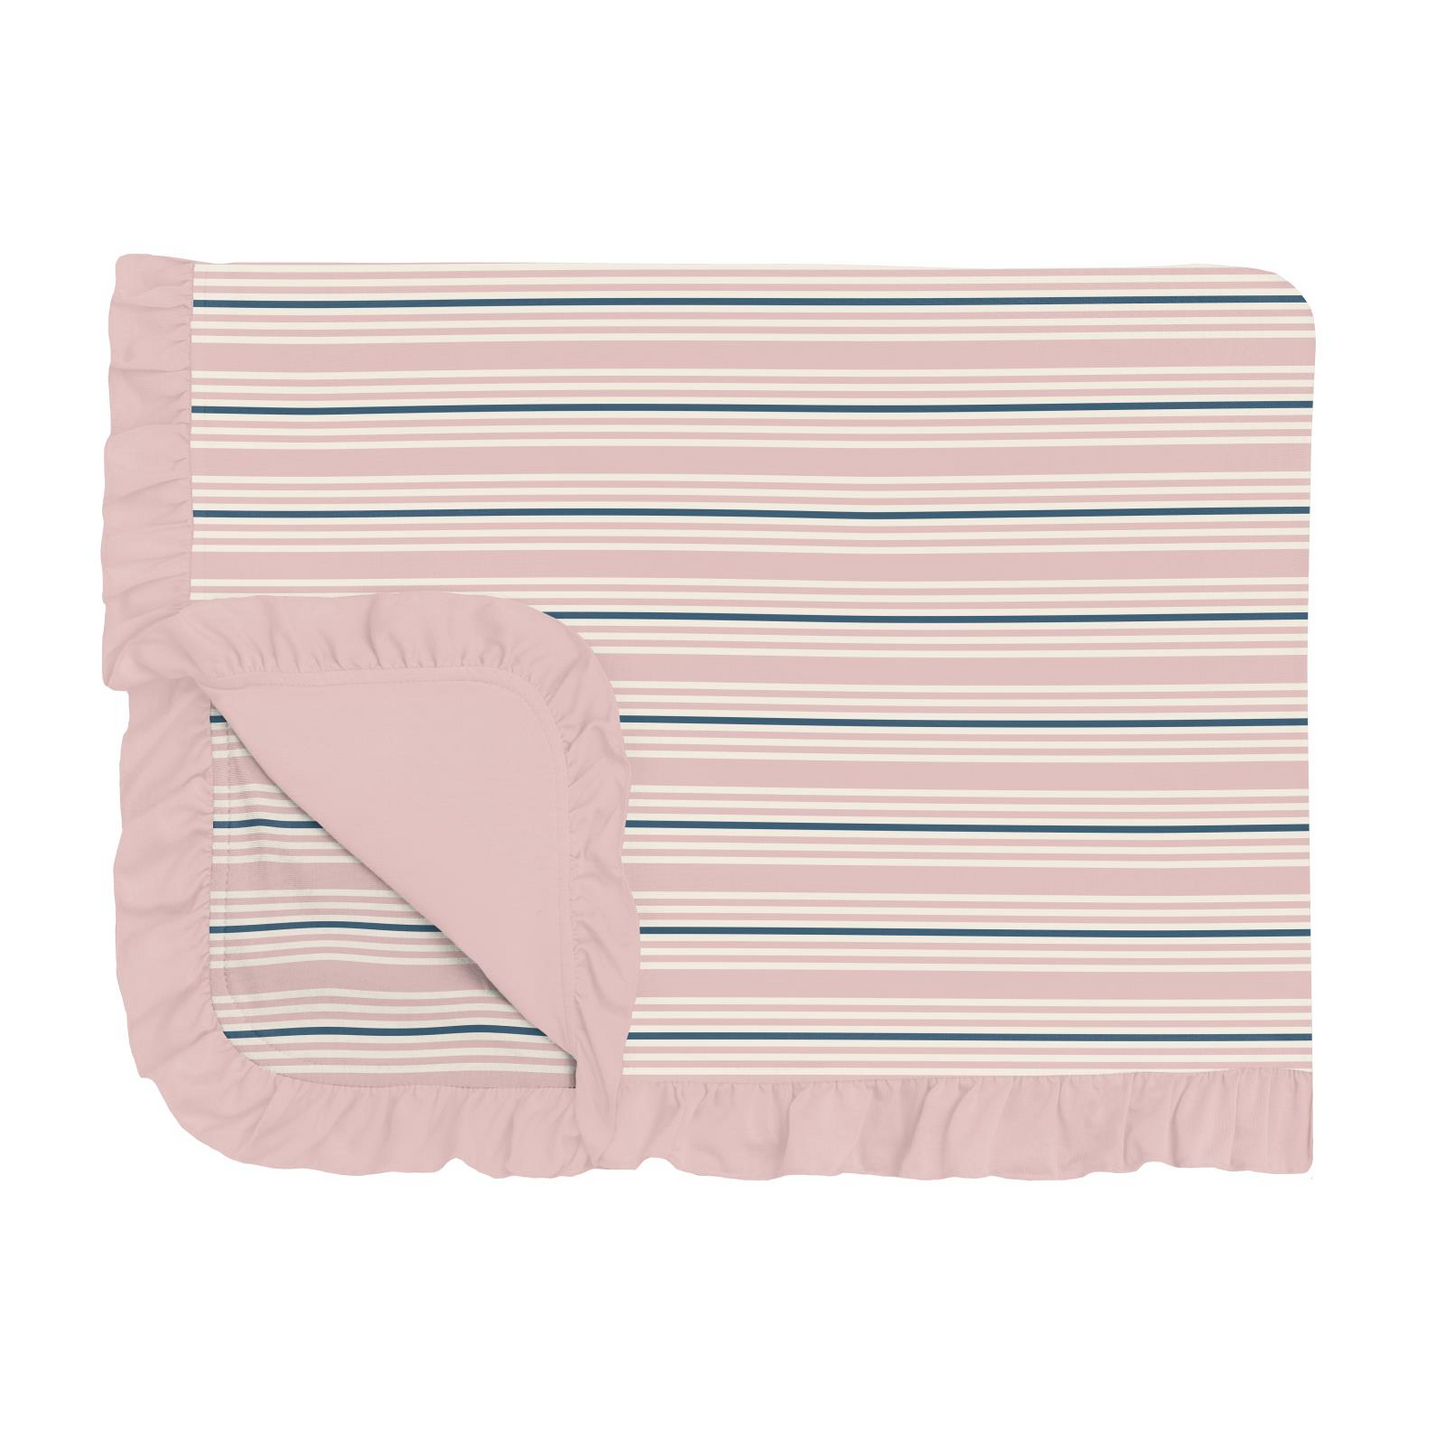 Kickee Pants Print Ruffle Toddler Blanket: Flotsam Stripe